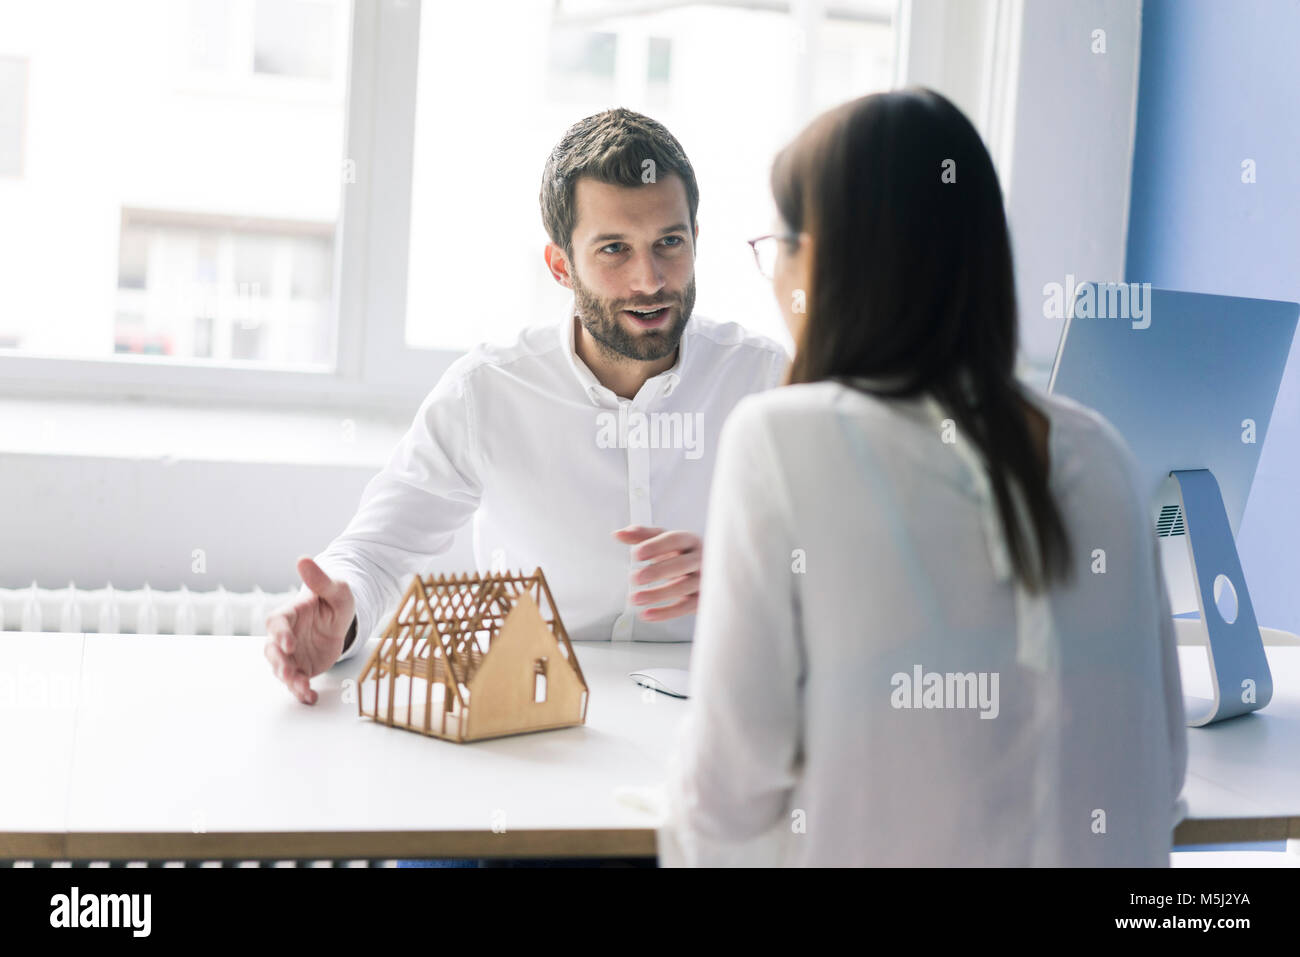 Man explaining architectural model to woman Stock Photo